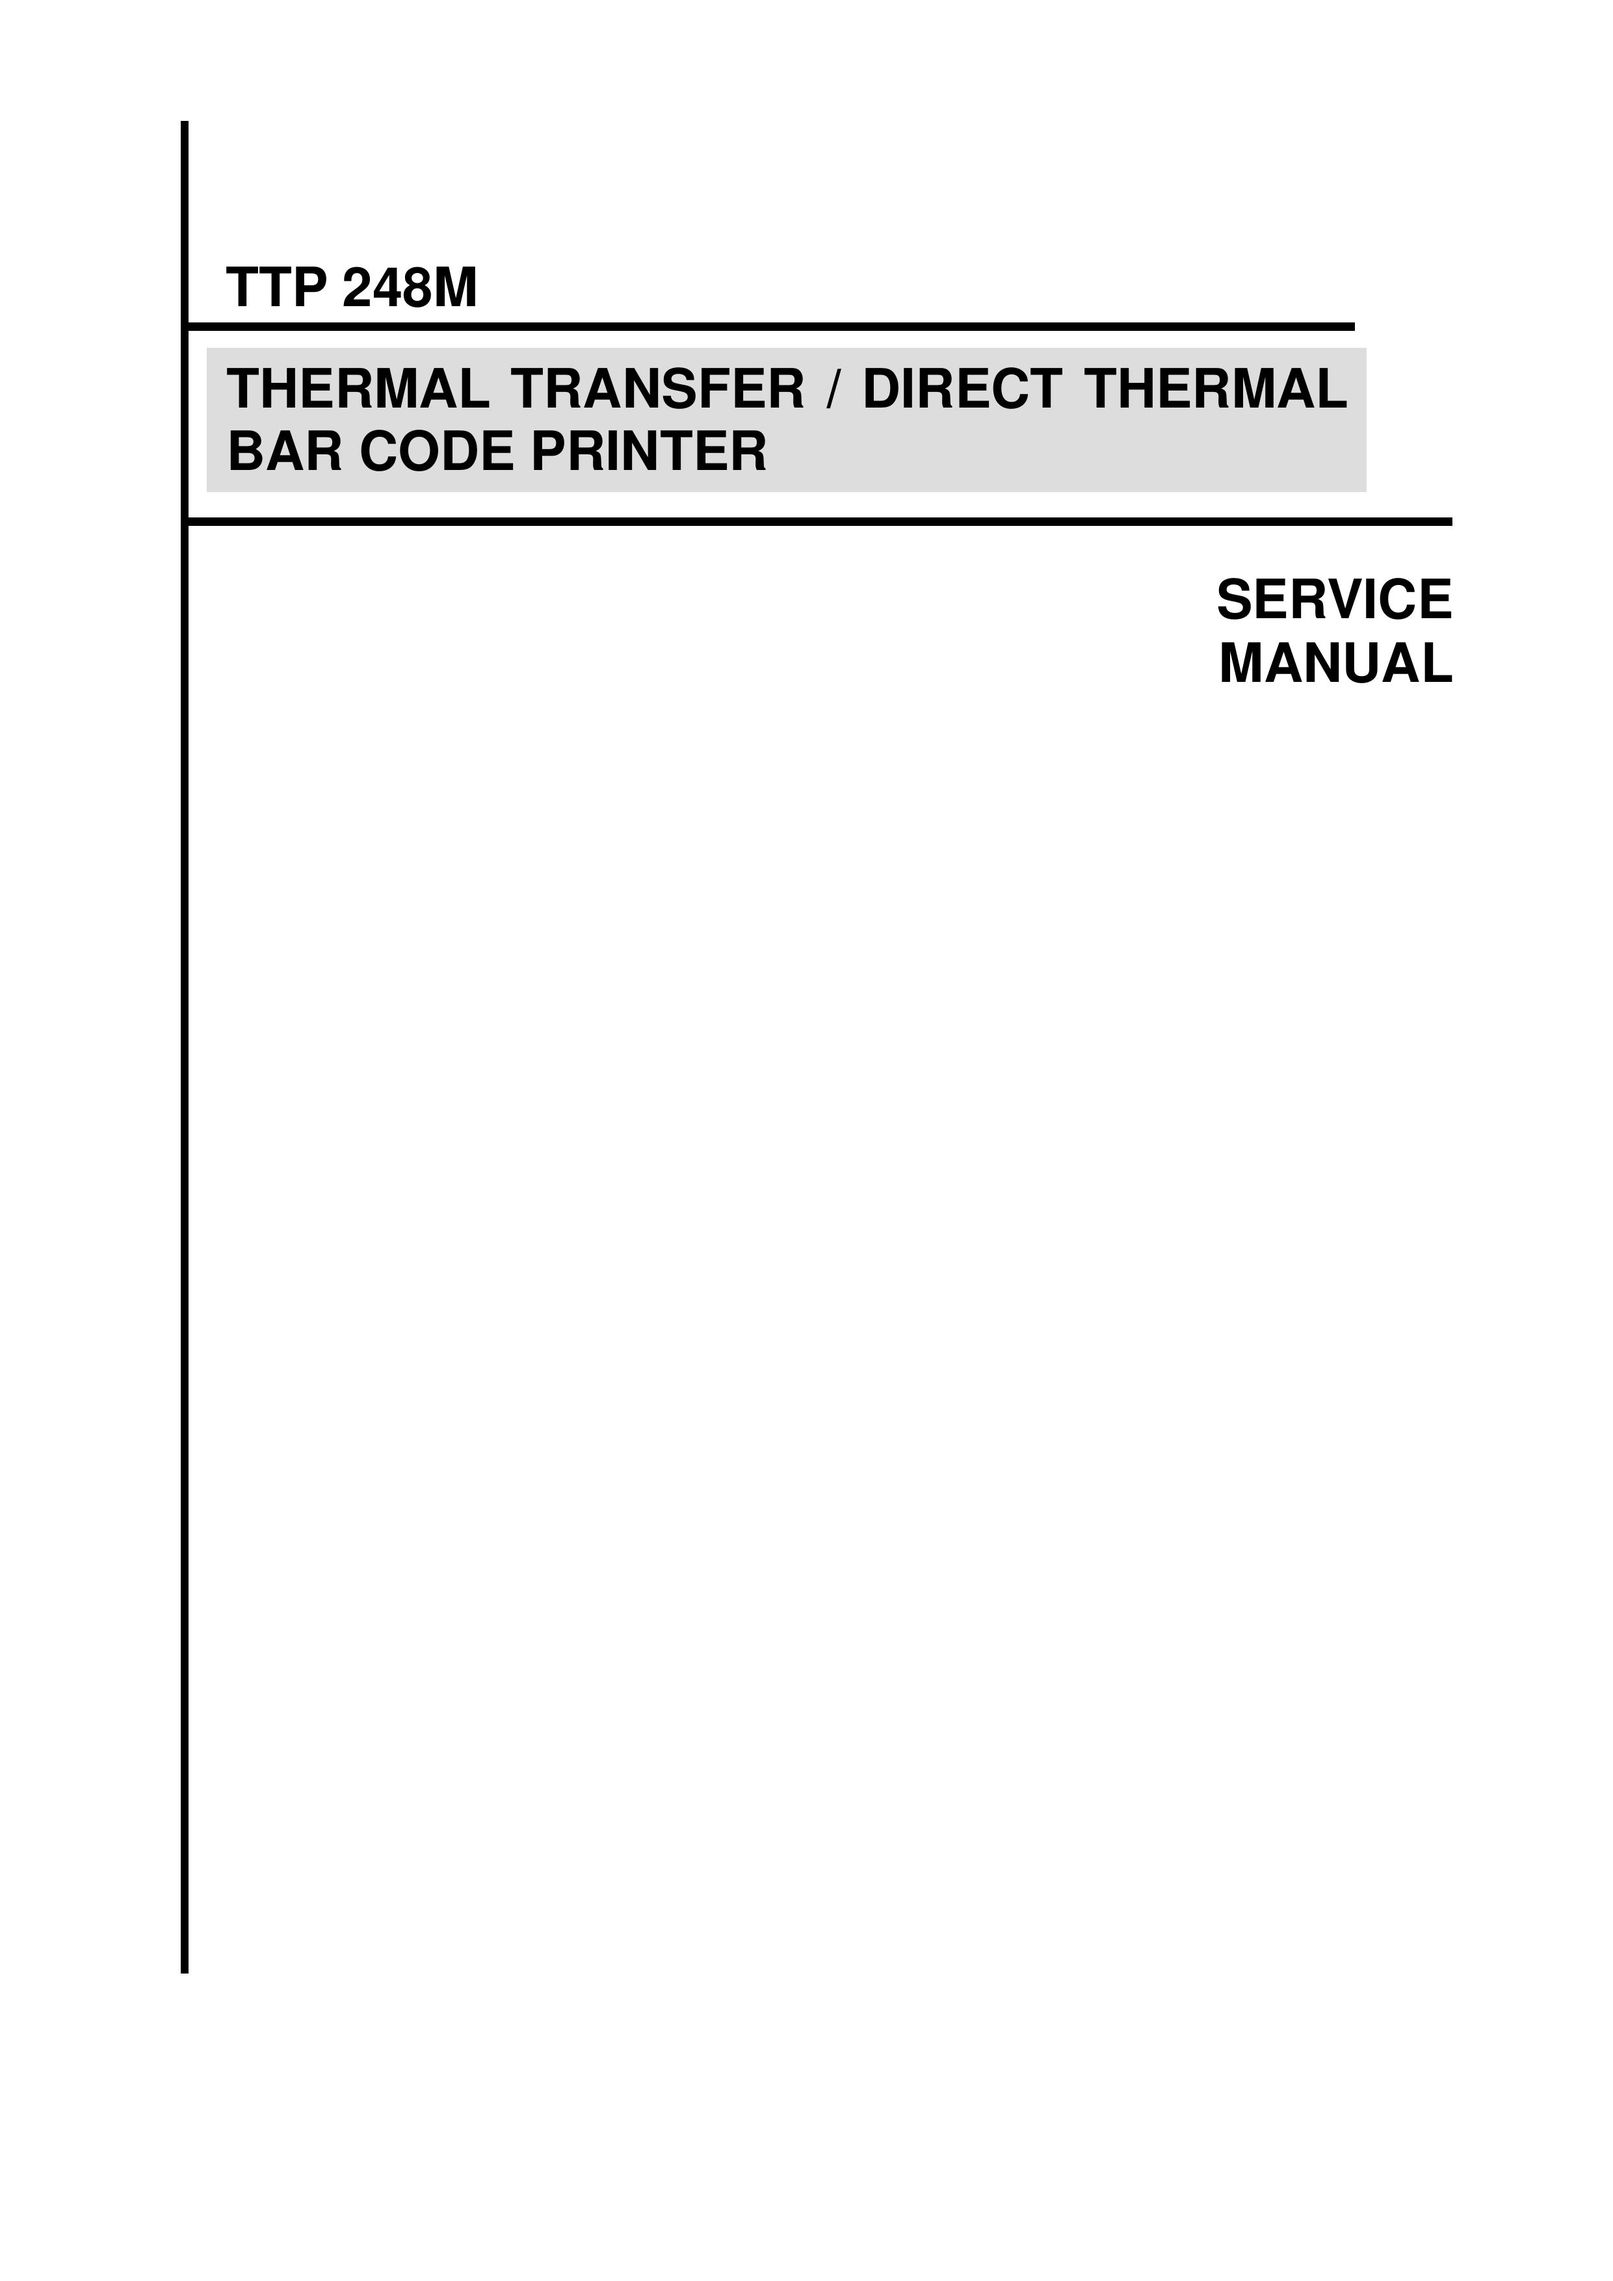 The Speaker Company TTP 248M Label Maker User Manual